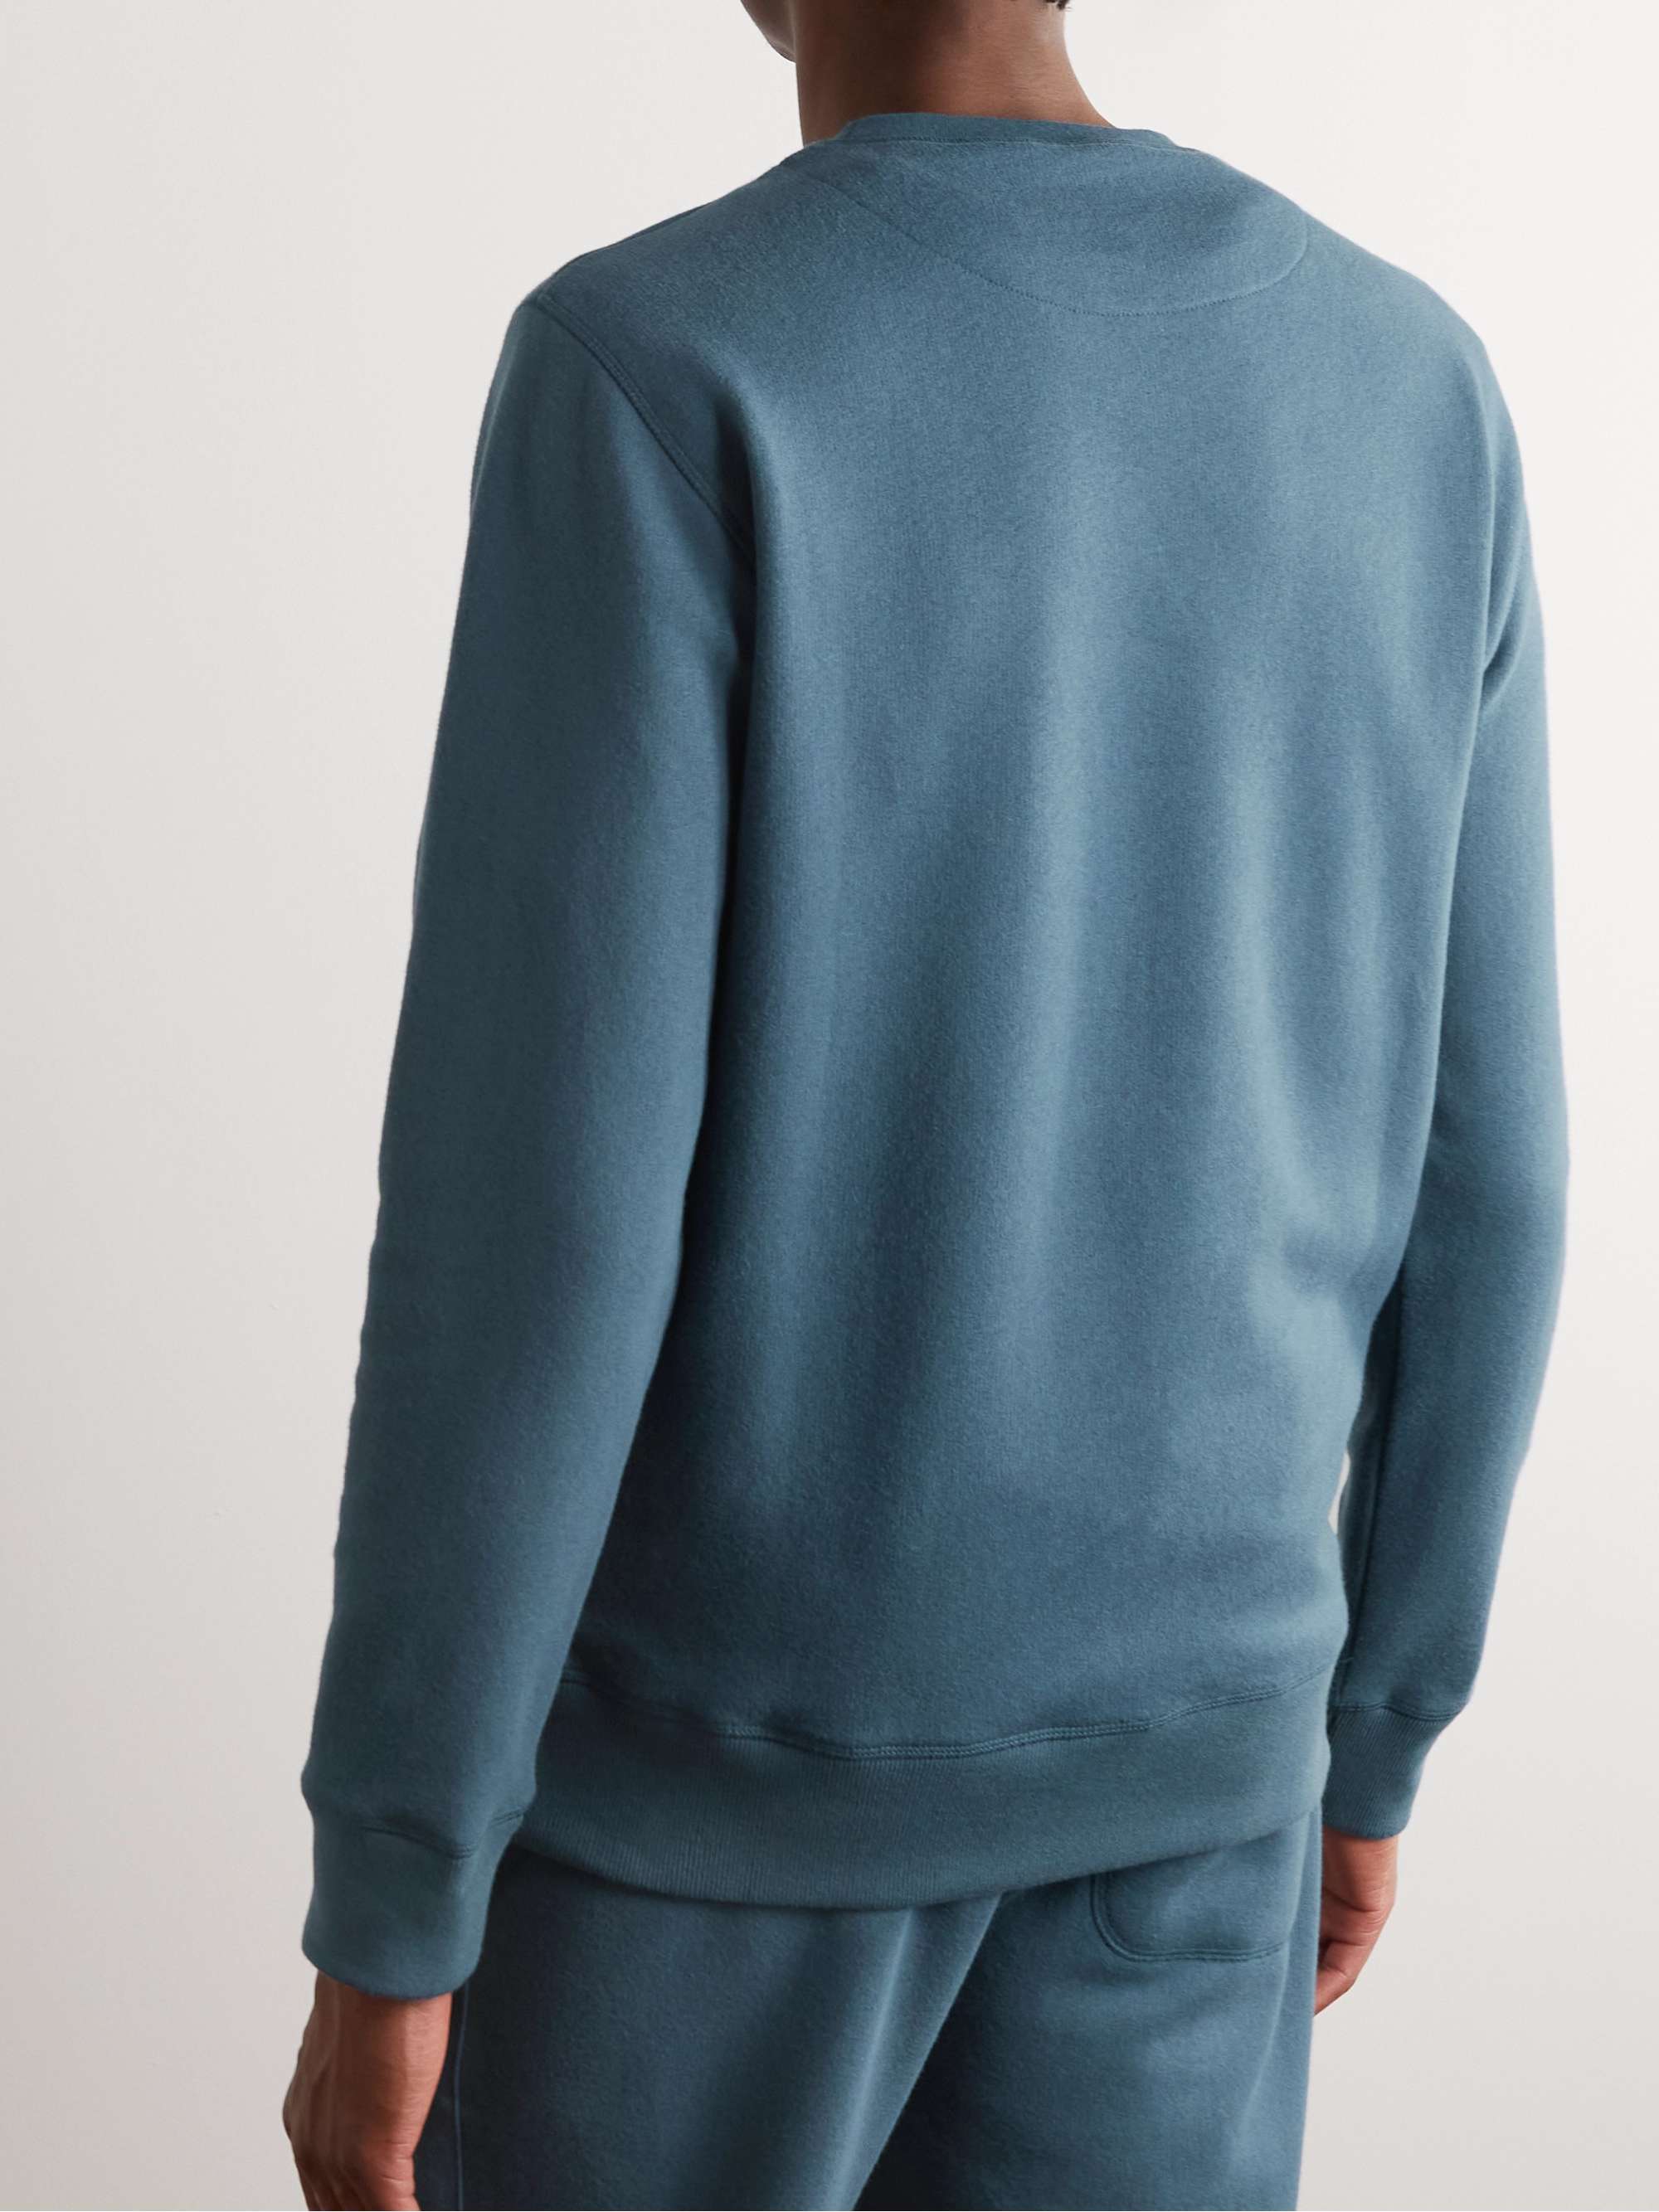 KINGSMAN Cotton and Cashmere-Blend Jersey Sweatshirt